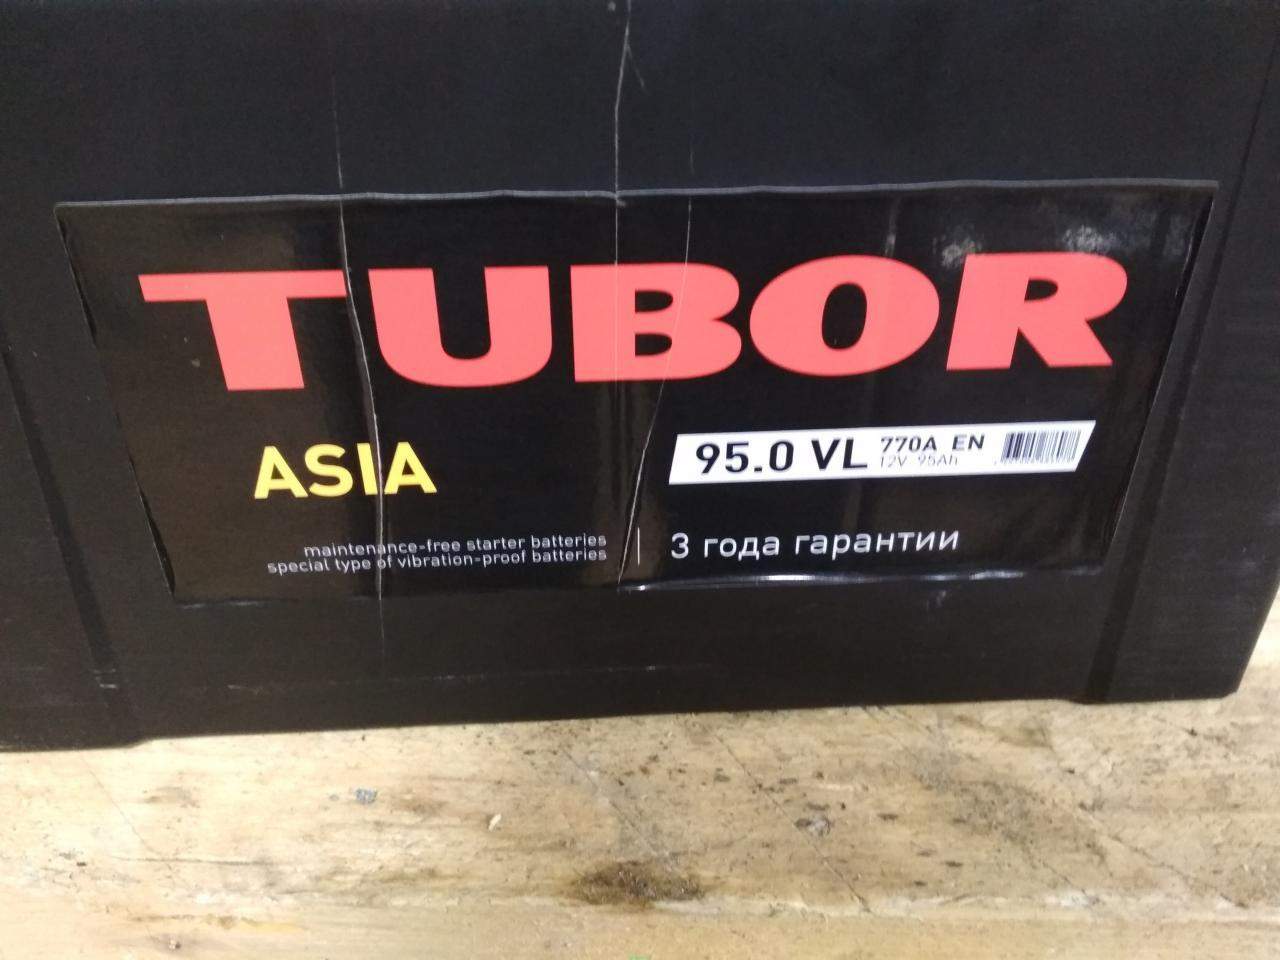 Asia 95. Tubor аккумуляторы линейка. Аккумулятор Tubor Firebird. Tubor аккумулятор PS. Tubor аккумулятор наклейка.